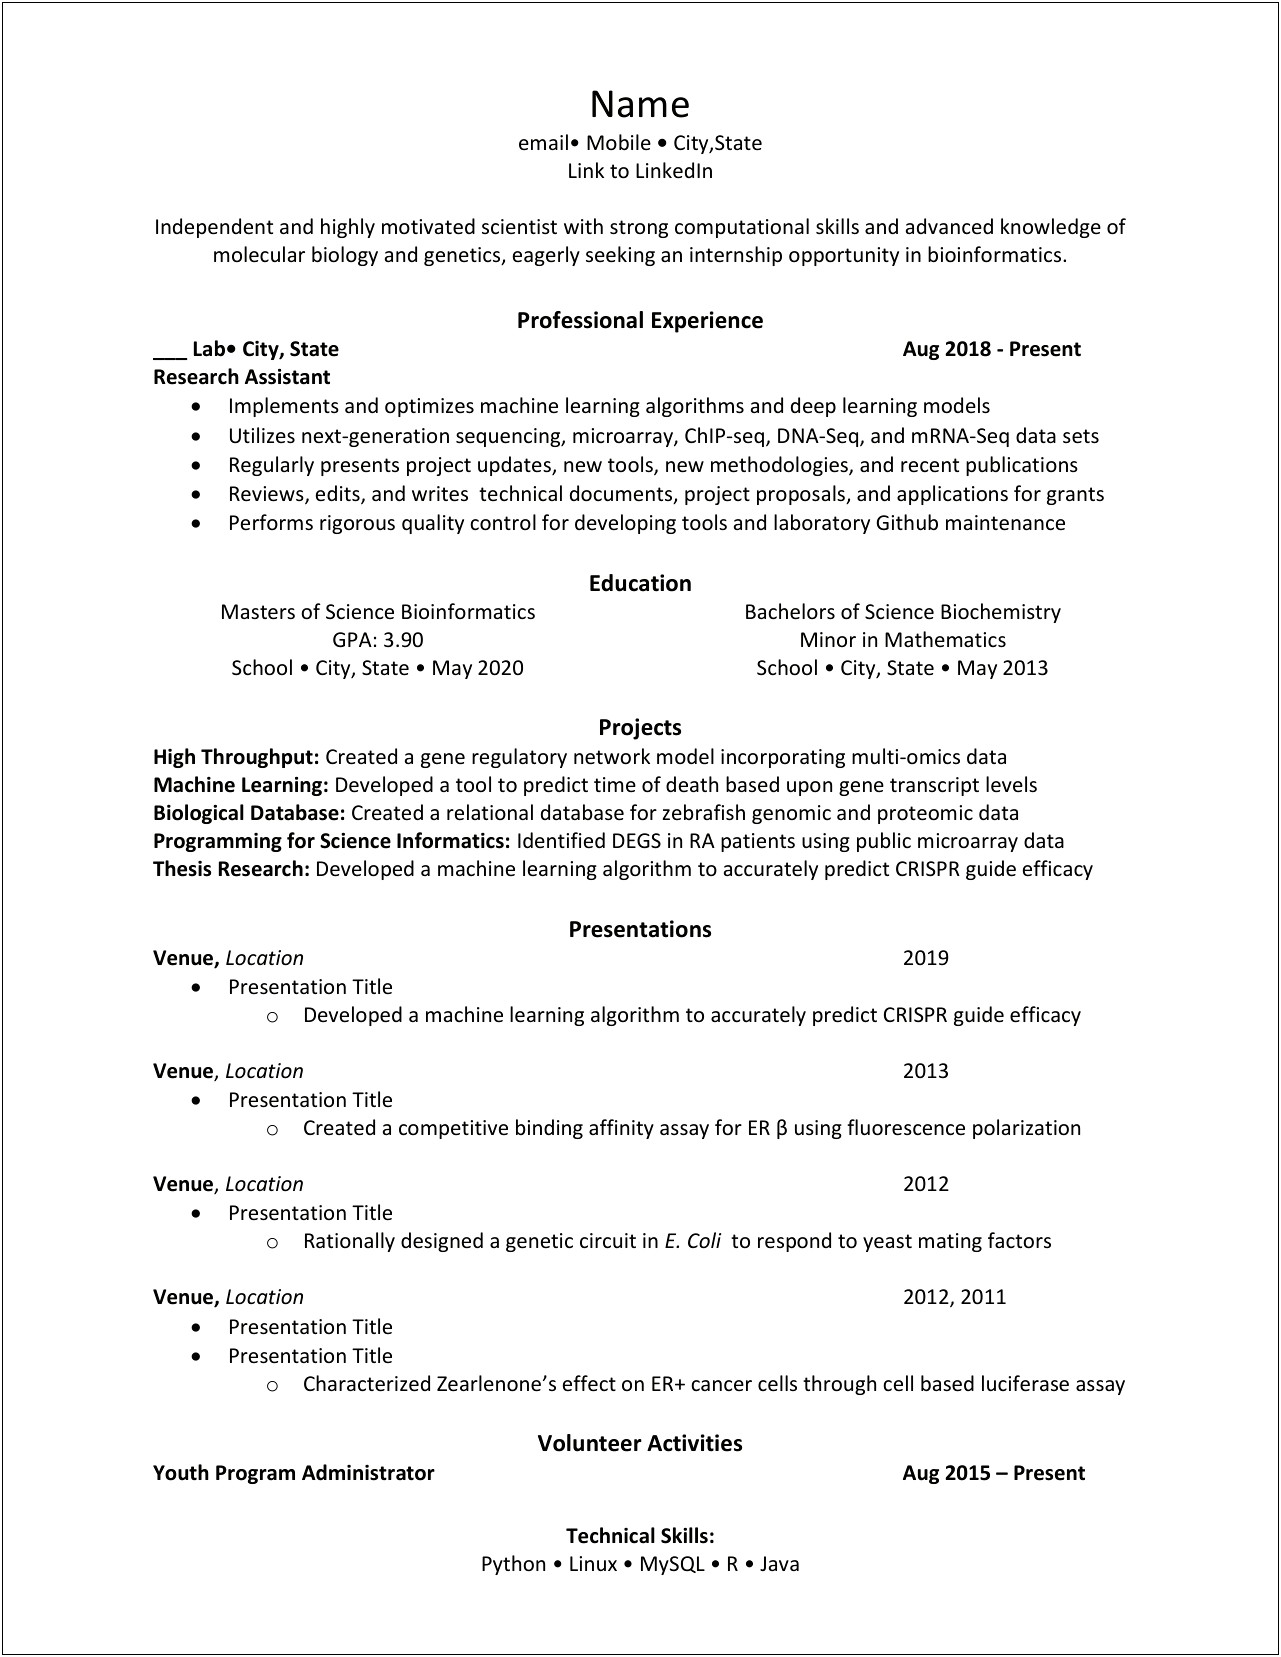 Updating Resume For Graduate School Application